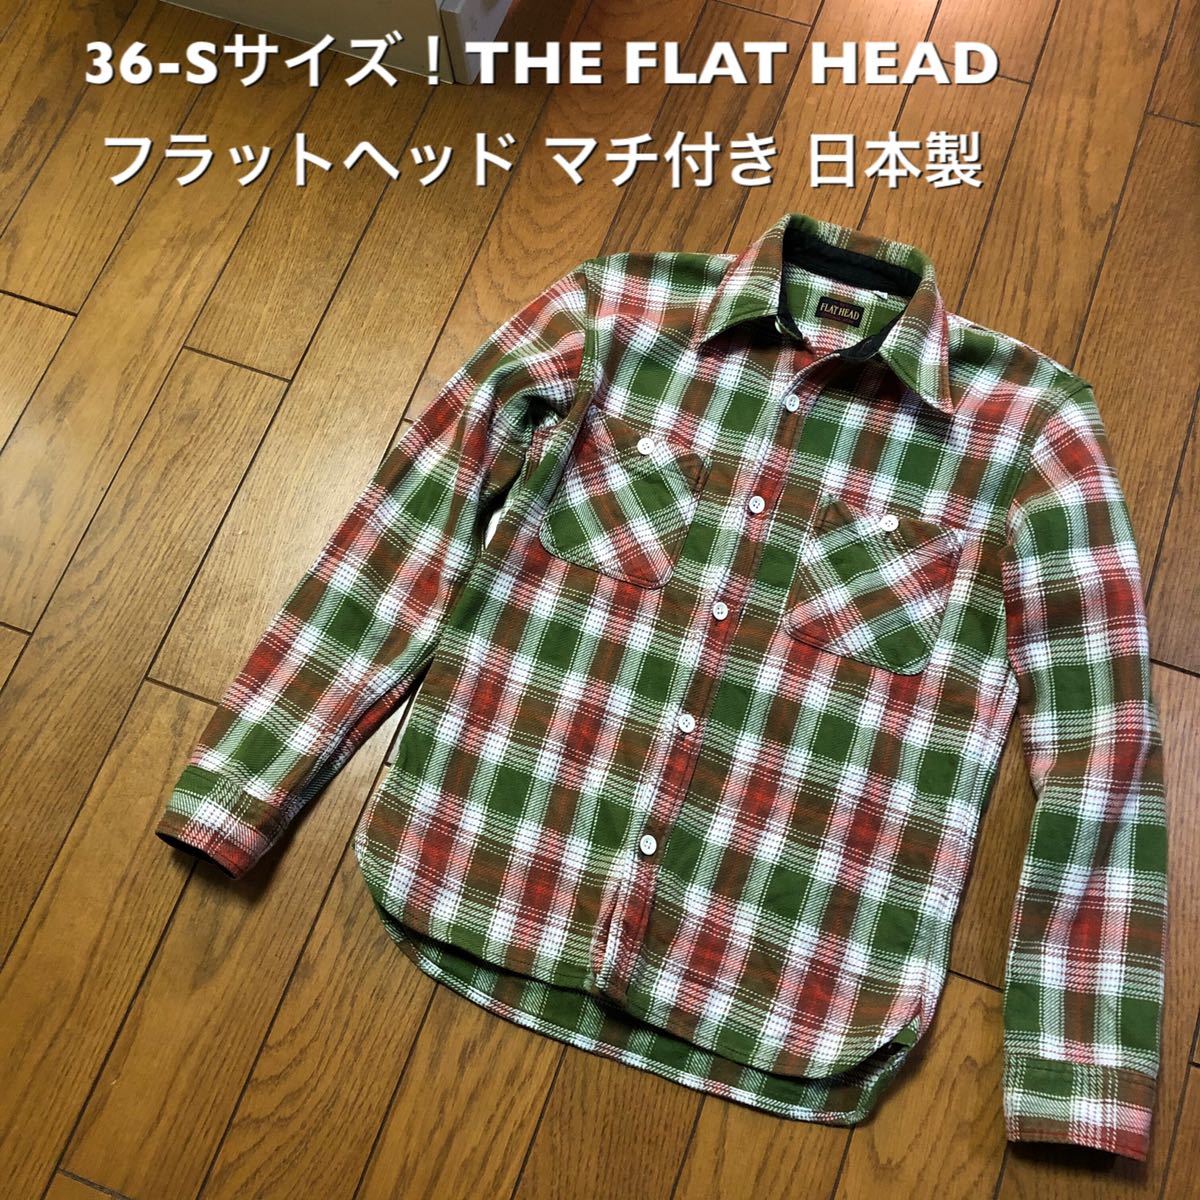 36-Sサイズ！THE FLAT HEAD フラットヘッド 古着長袖ネルシャツ グリーンベース マチ付き 日本製 チェックシャツ 長袖シャツ